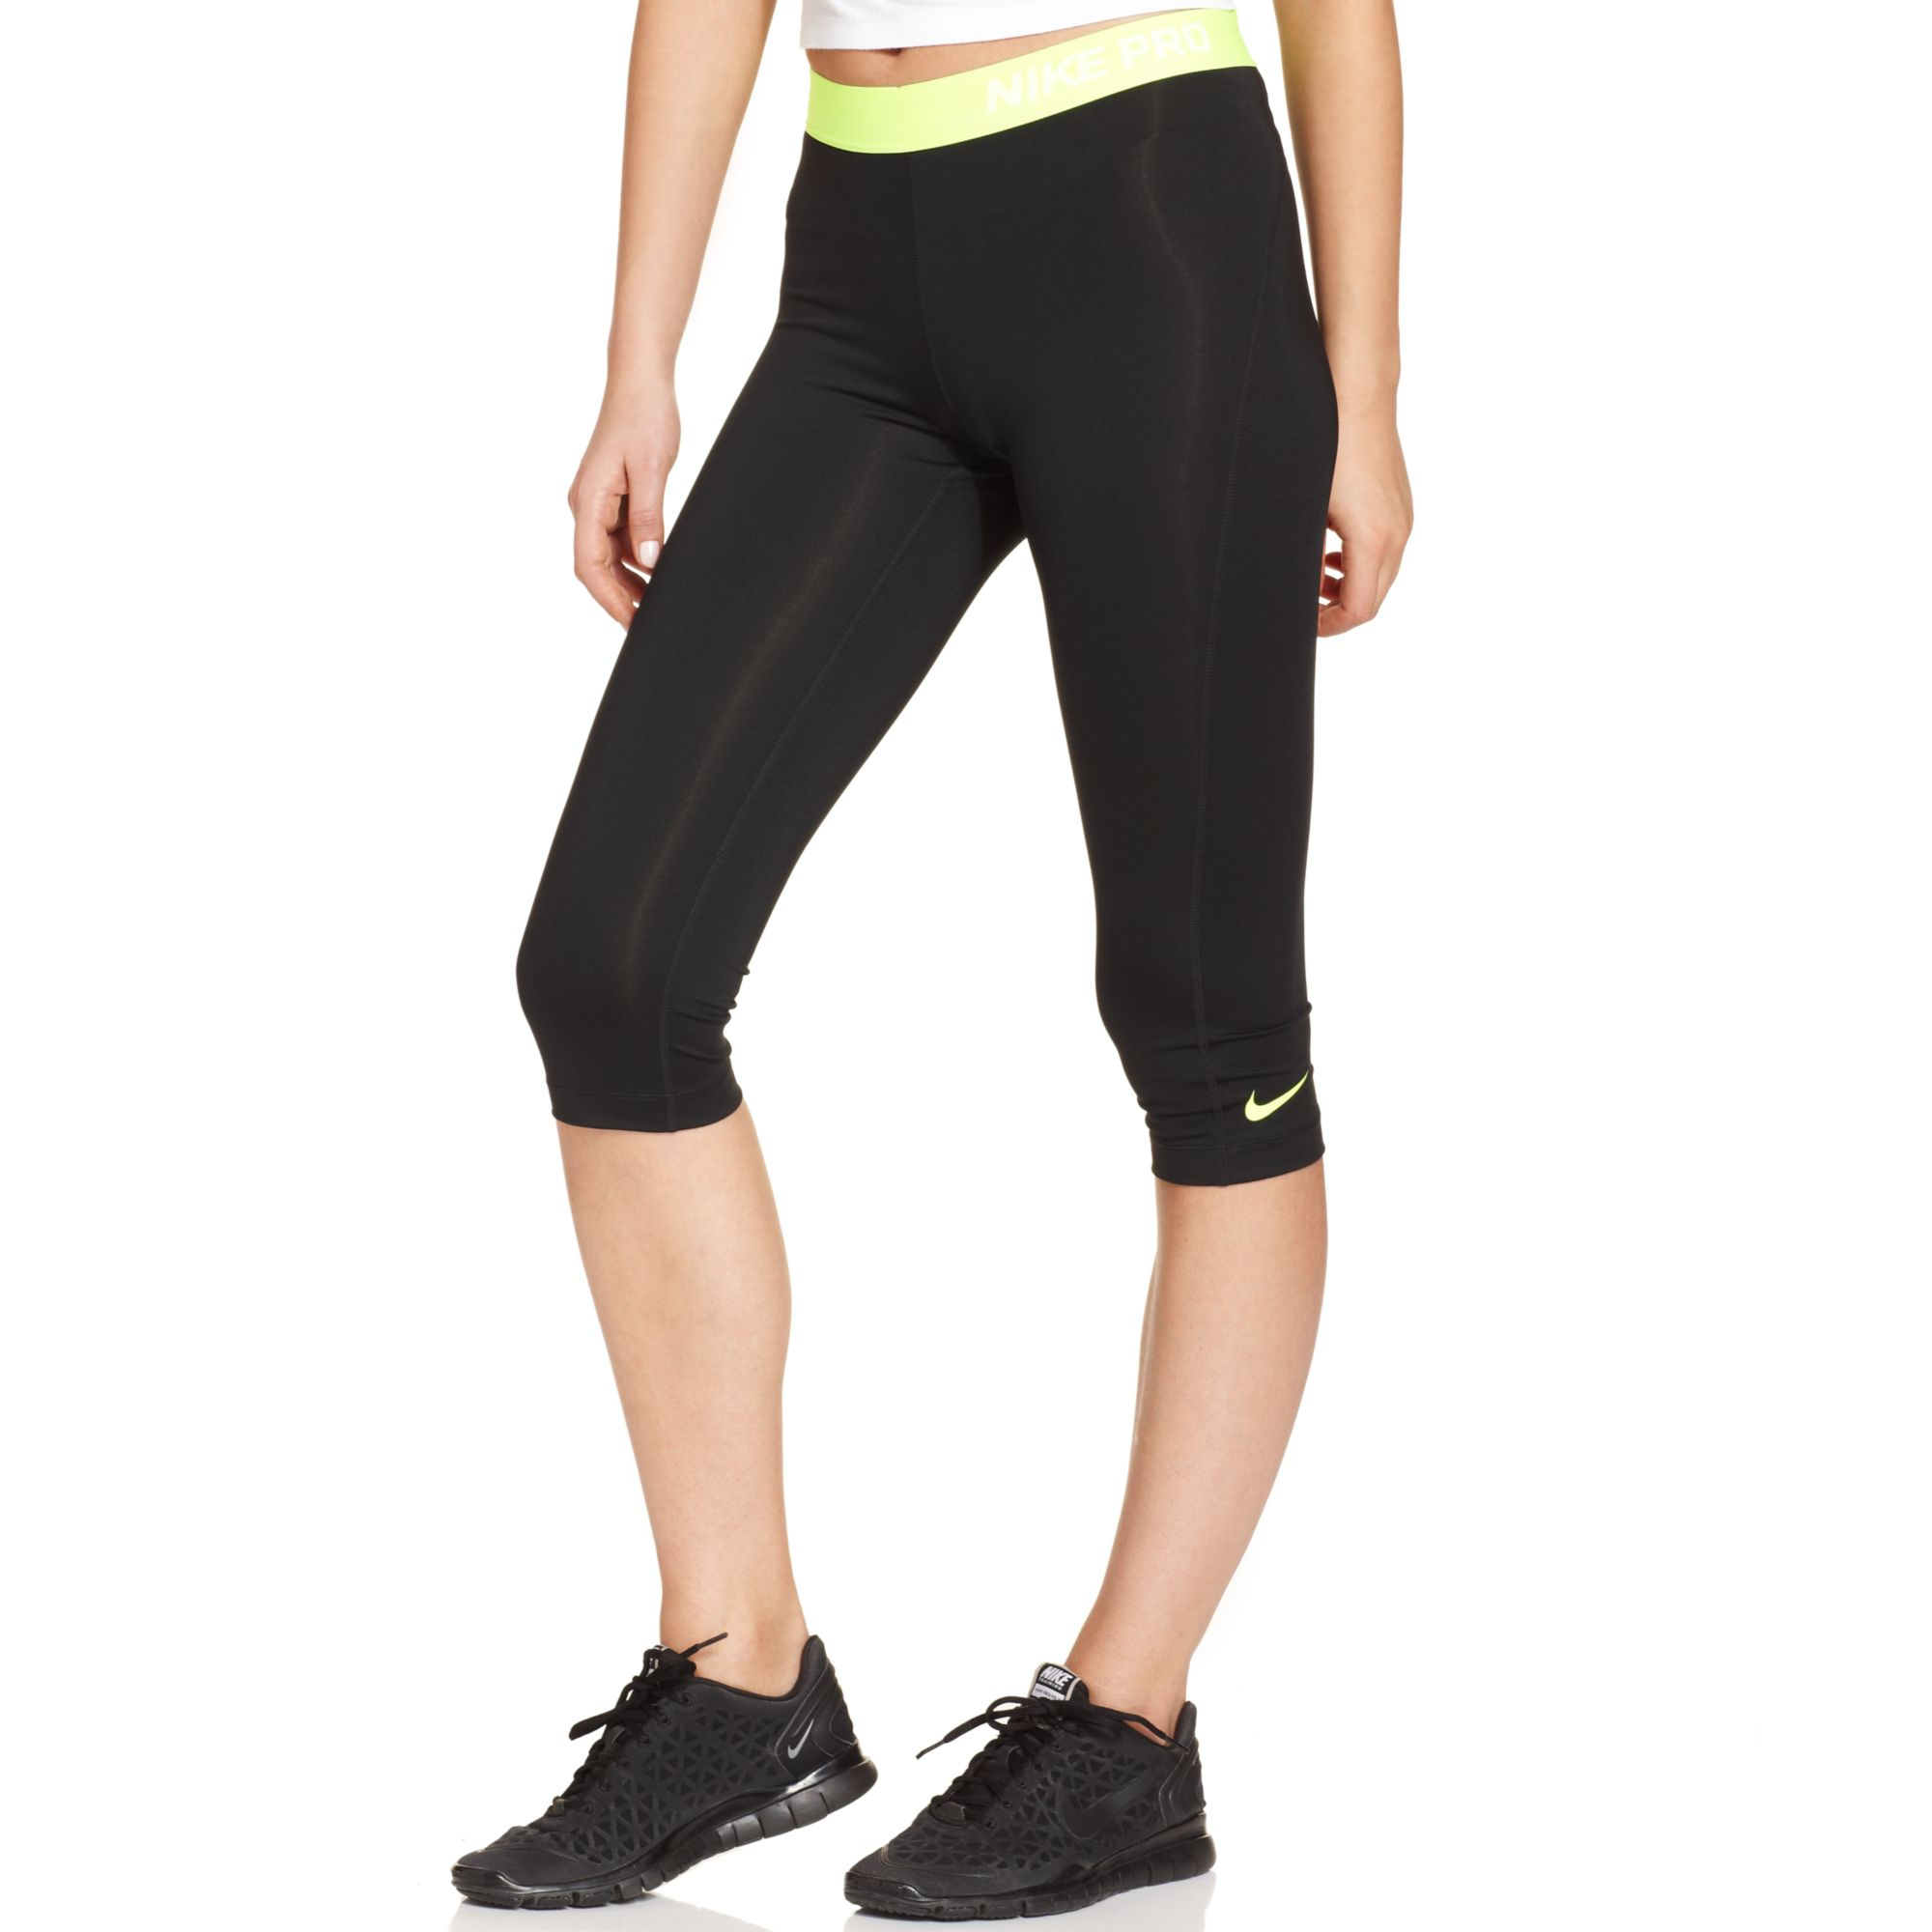 Nike Pro Capri Active Leggings in Black (Charcoal) | Lyst